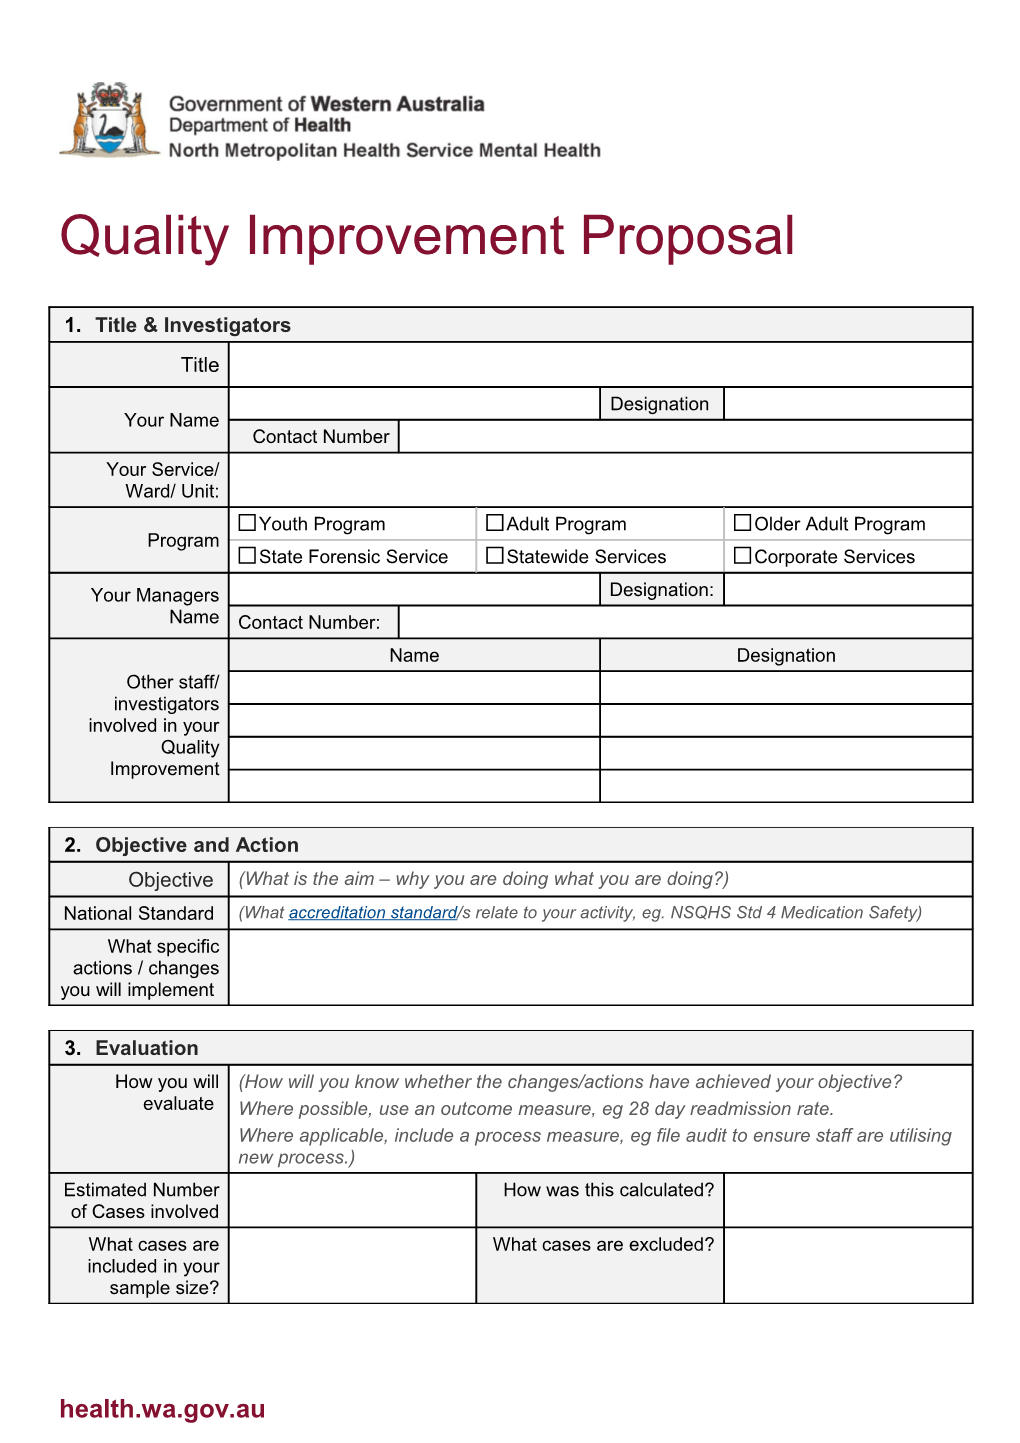 Quality Improvement Proposal